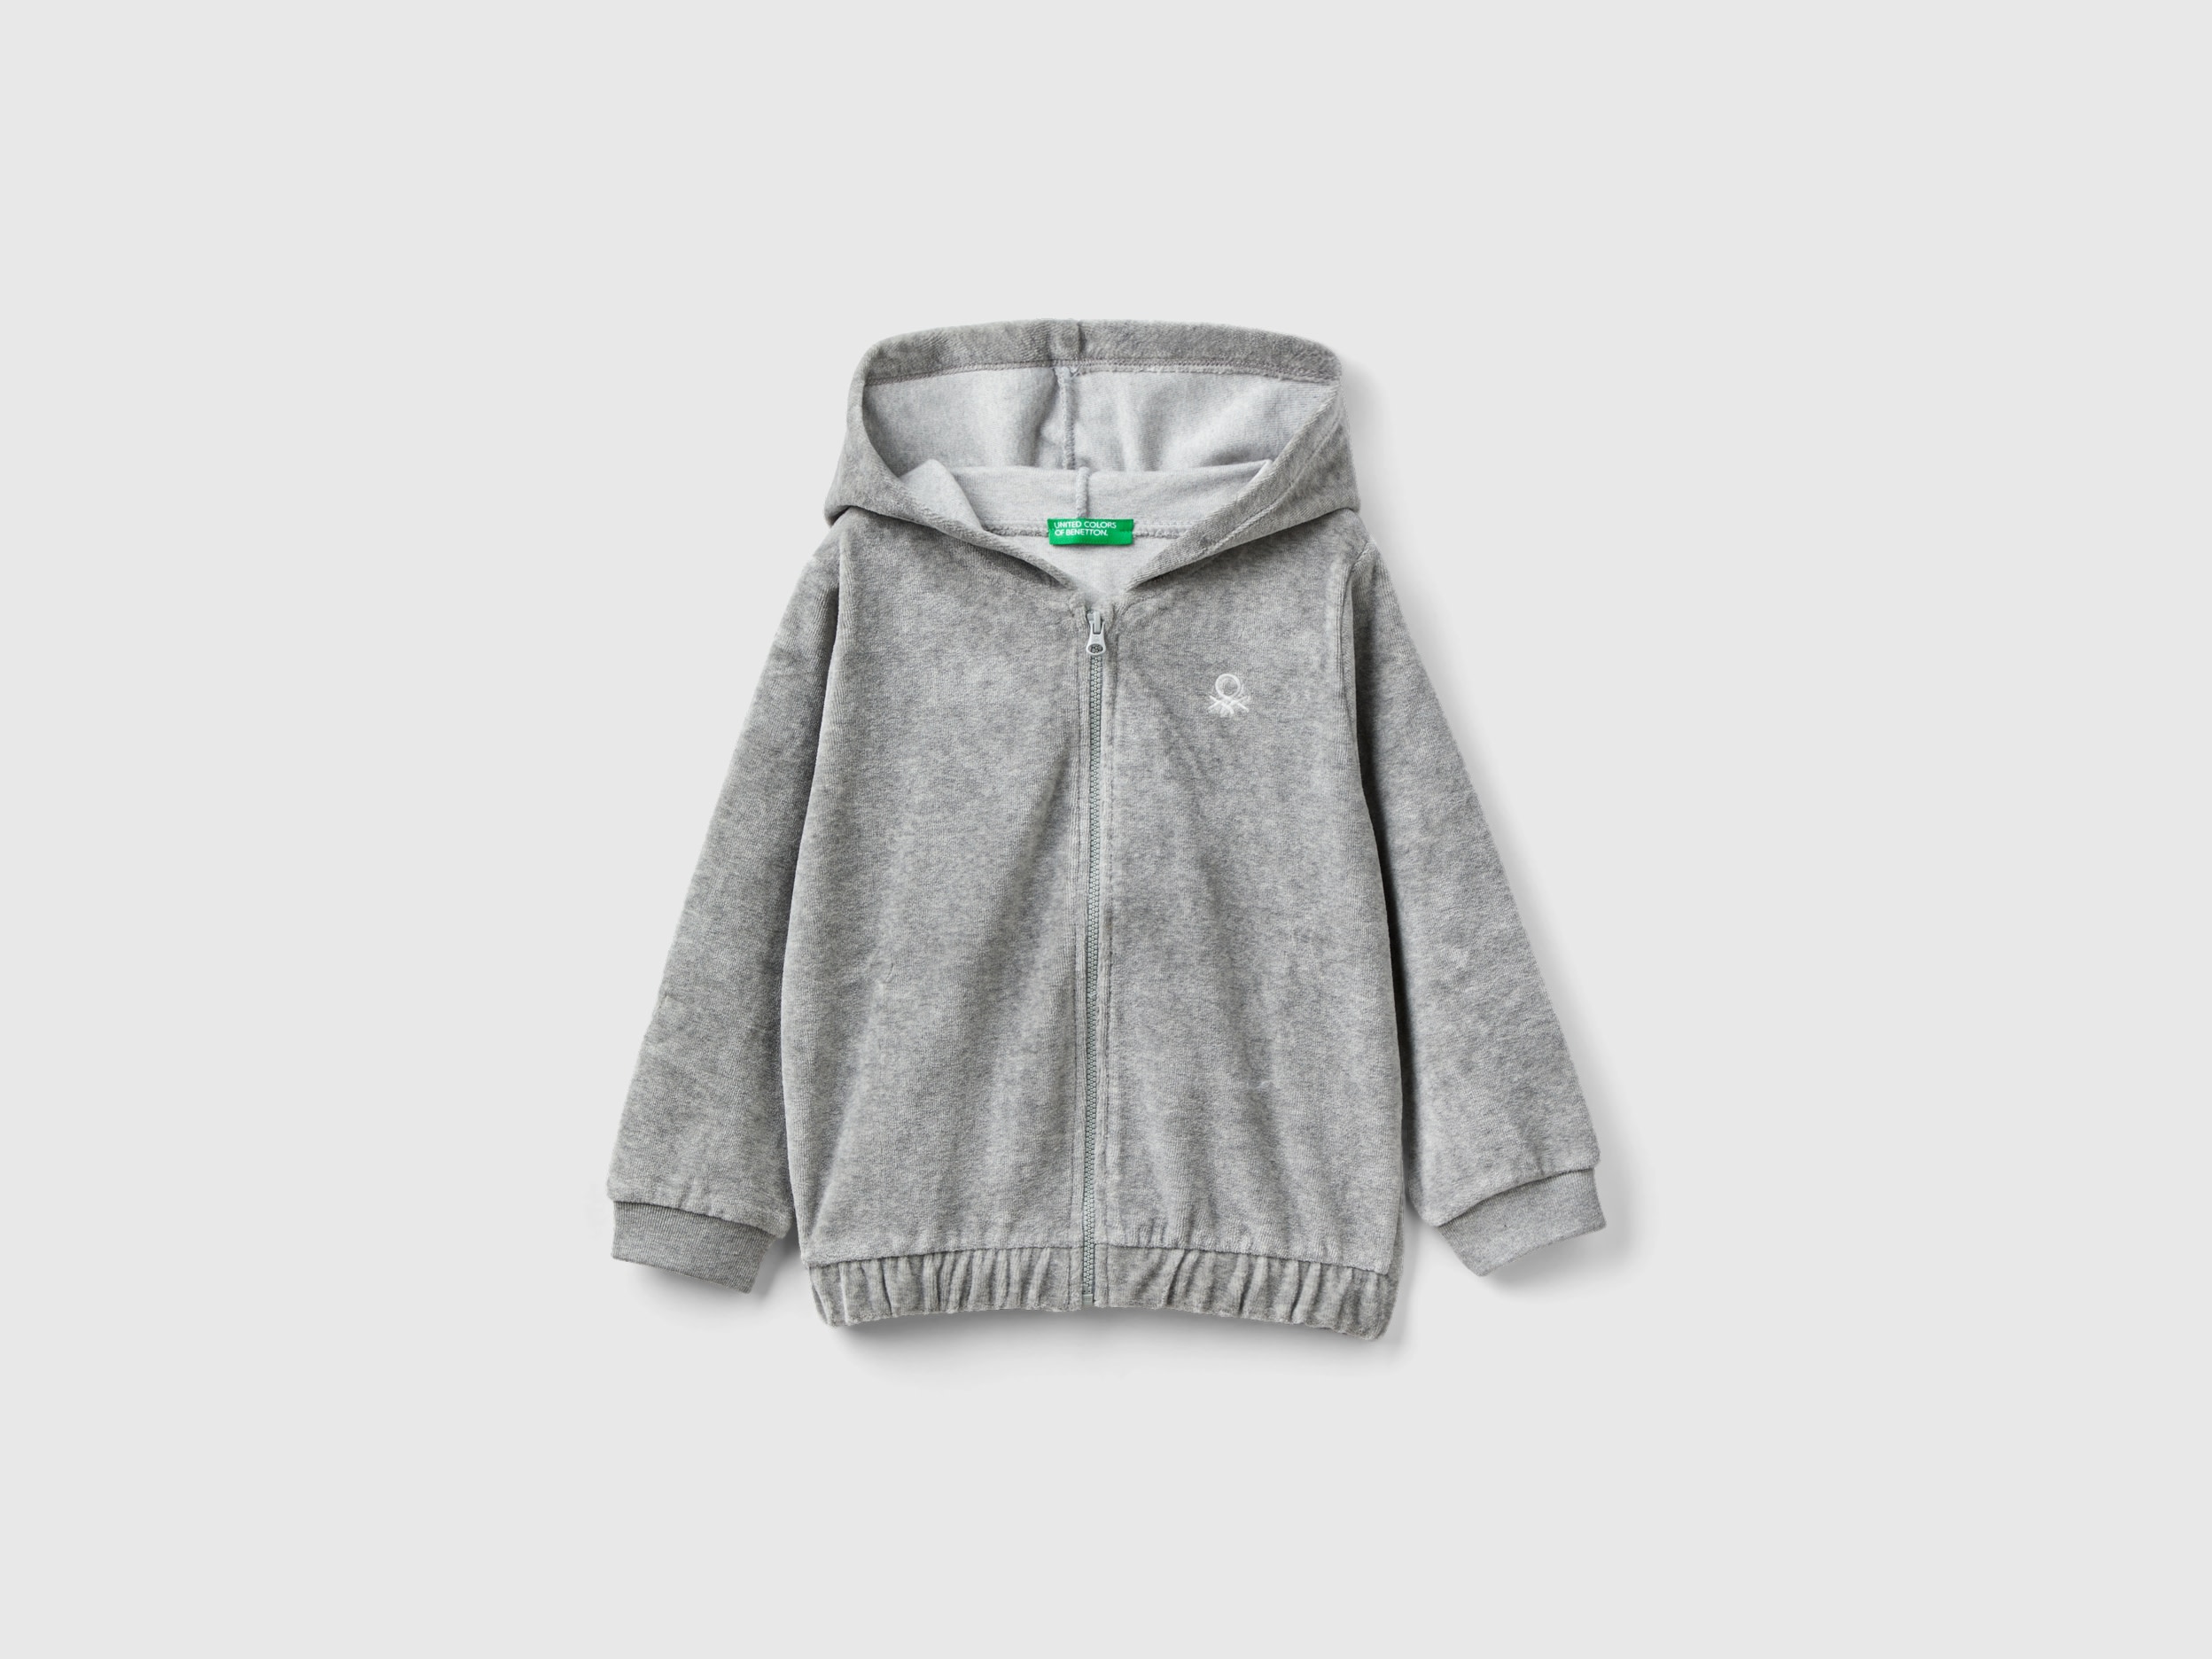 Benetton, Chenille Sweatshirt With Zip And Hood, size 4-5, Light Gray, Kids